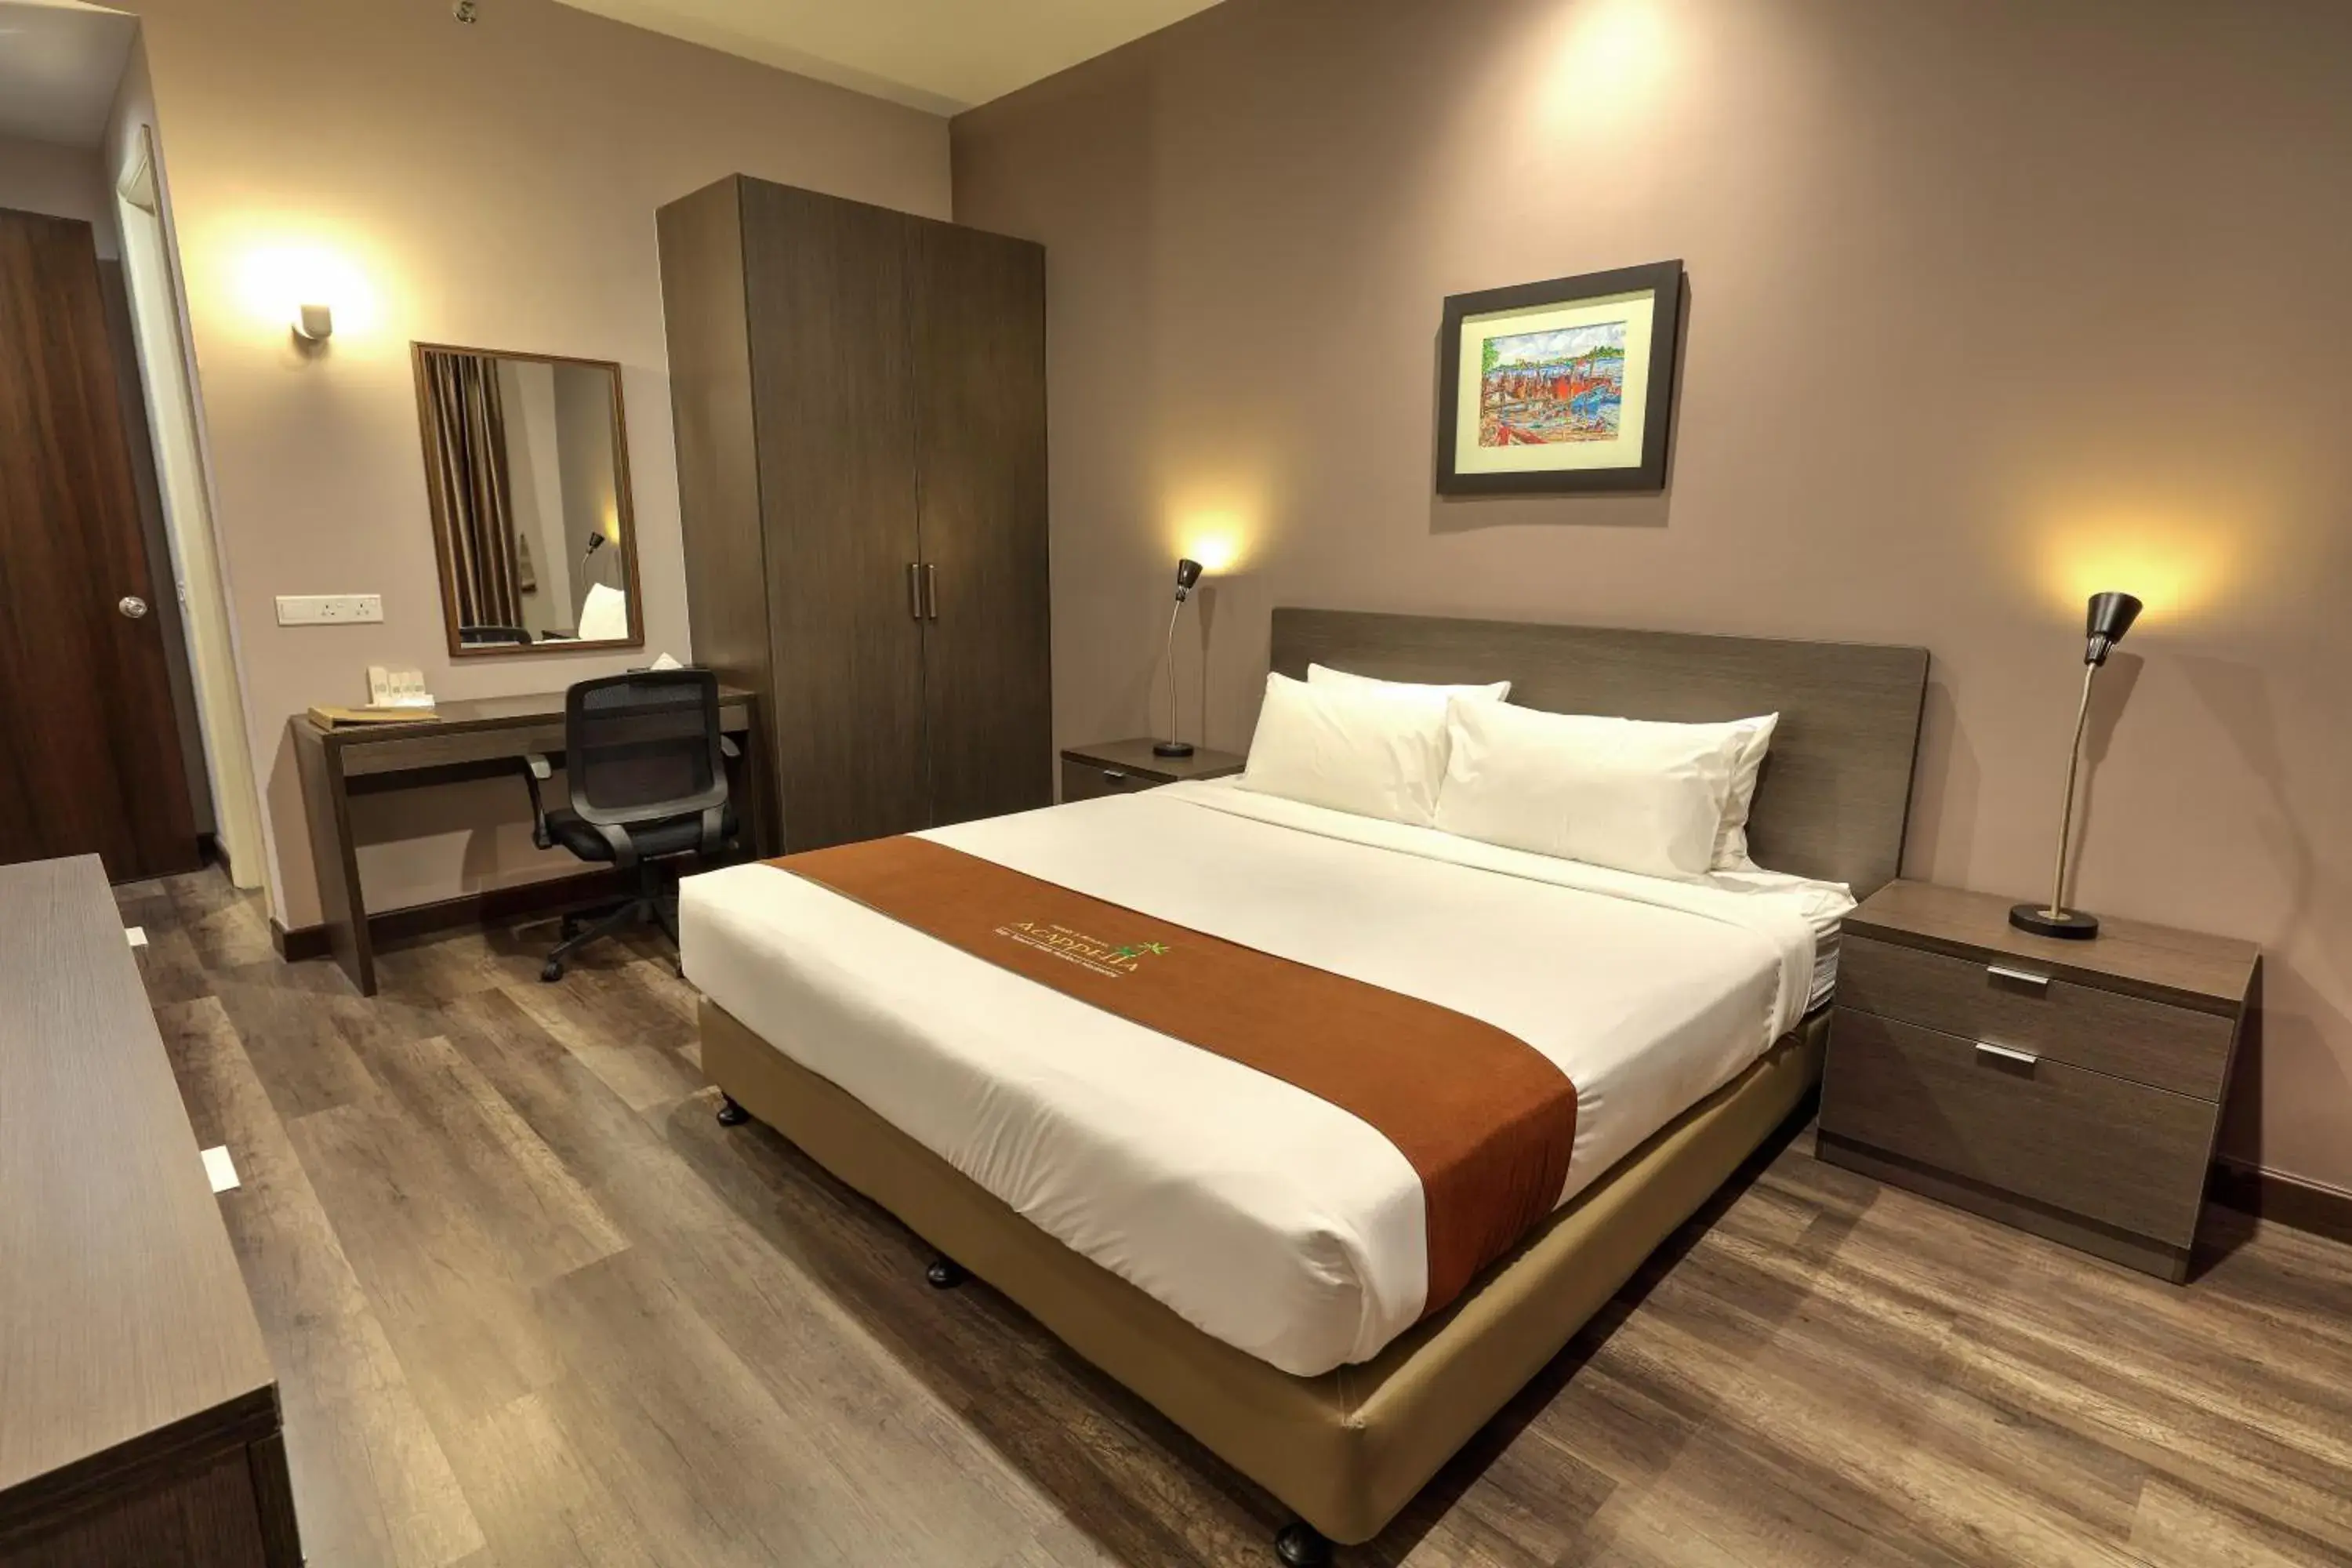 Deluxe King Suite in Acappella Suite Hotel, Shah Alam